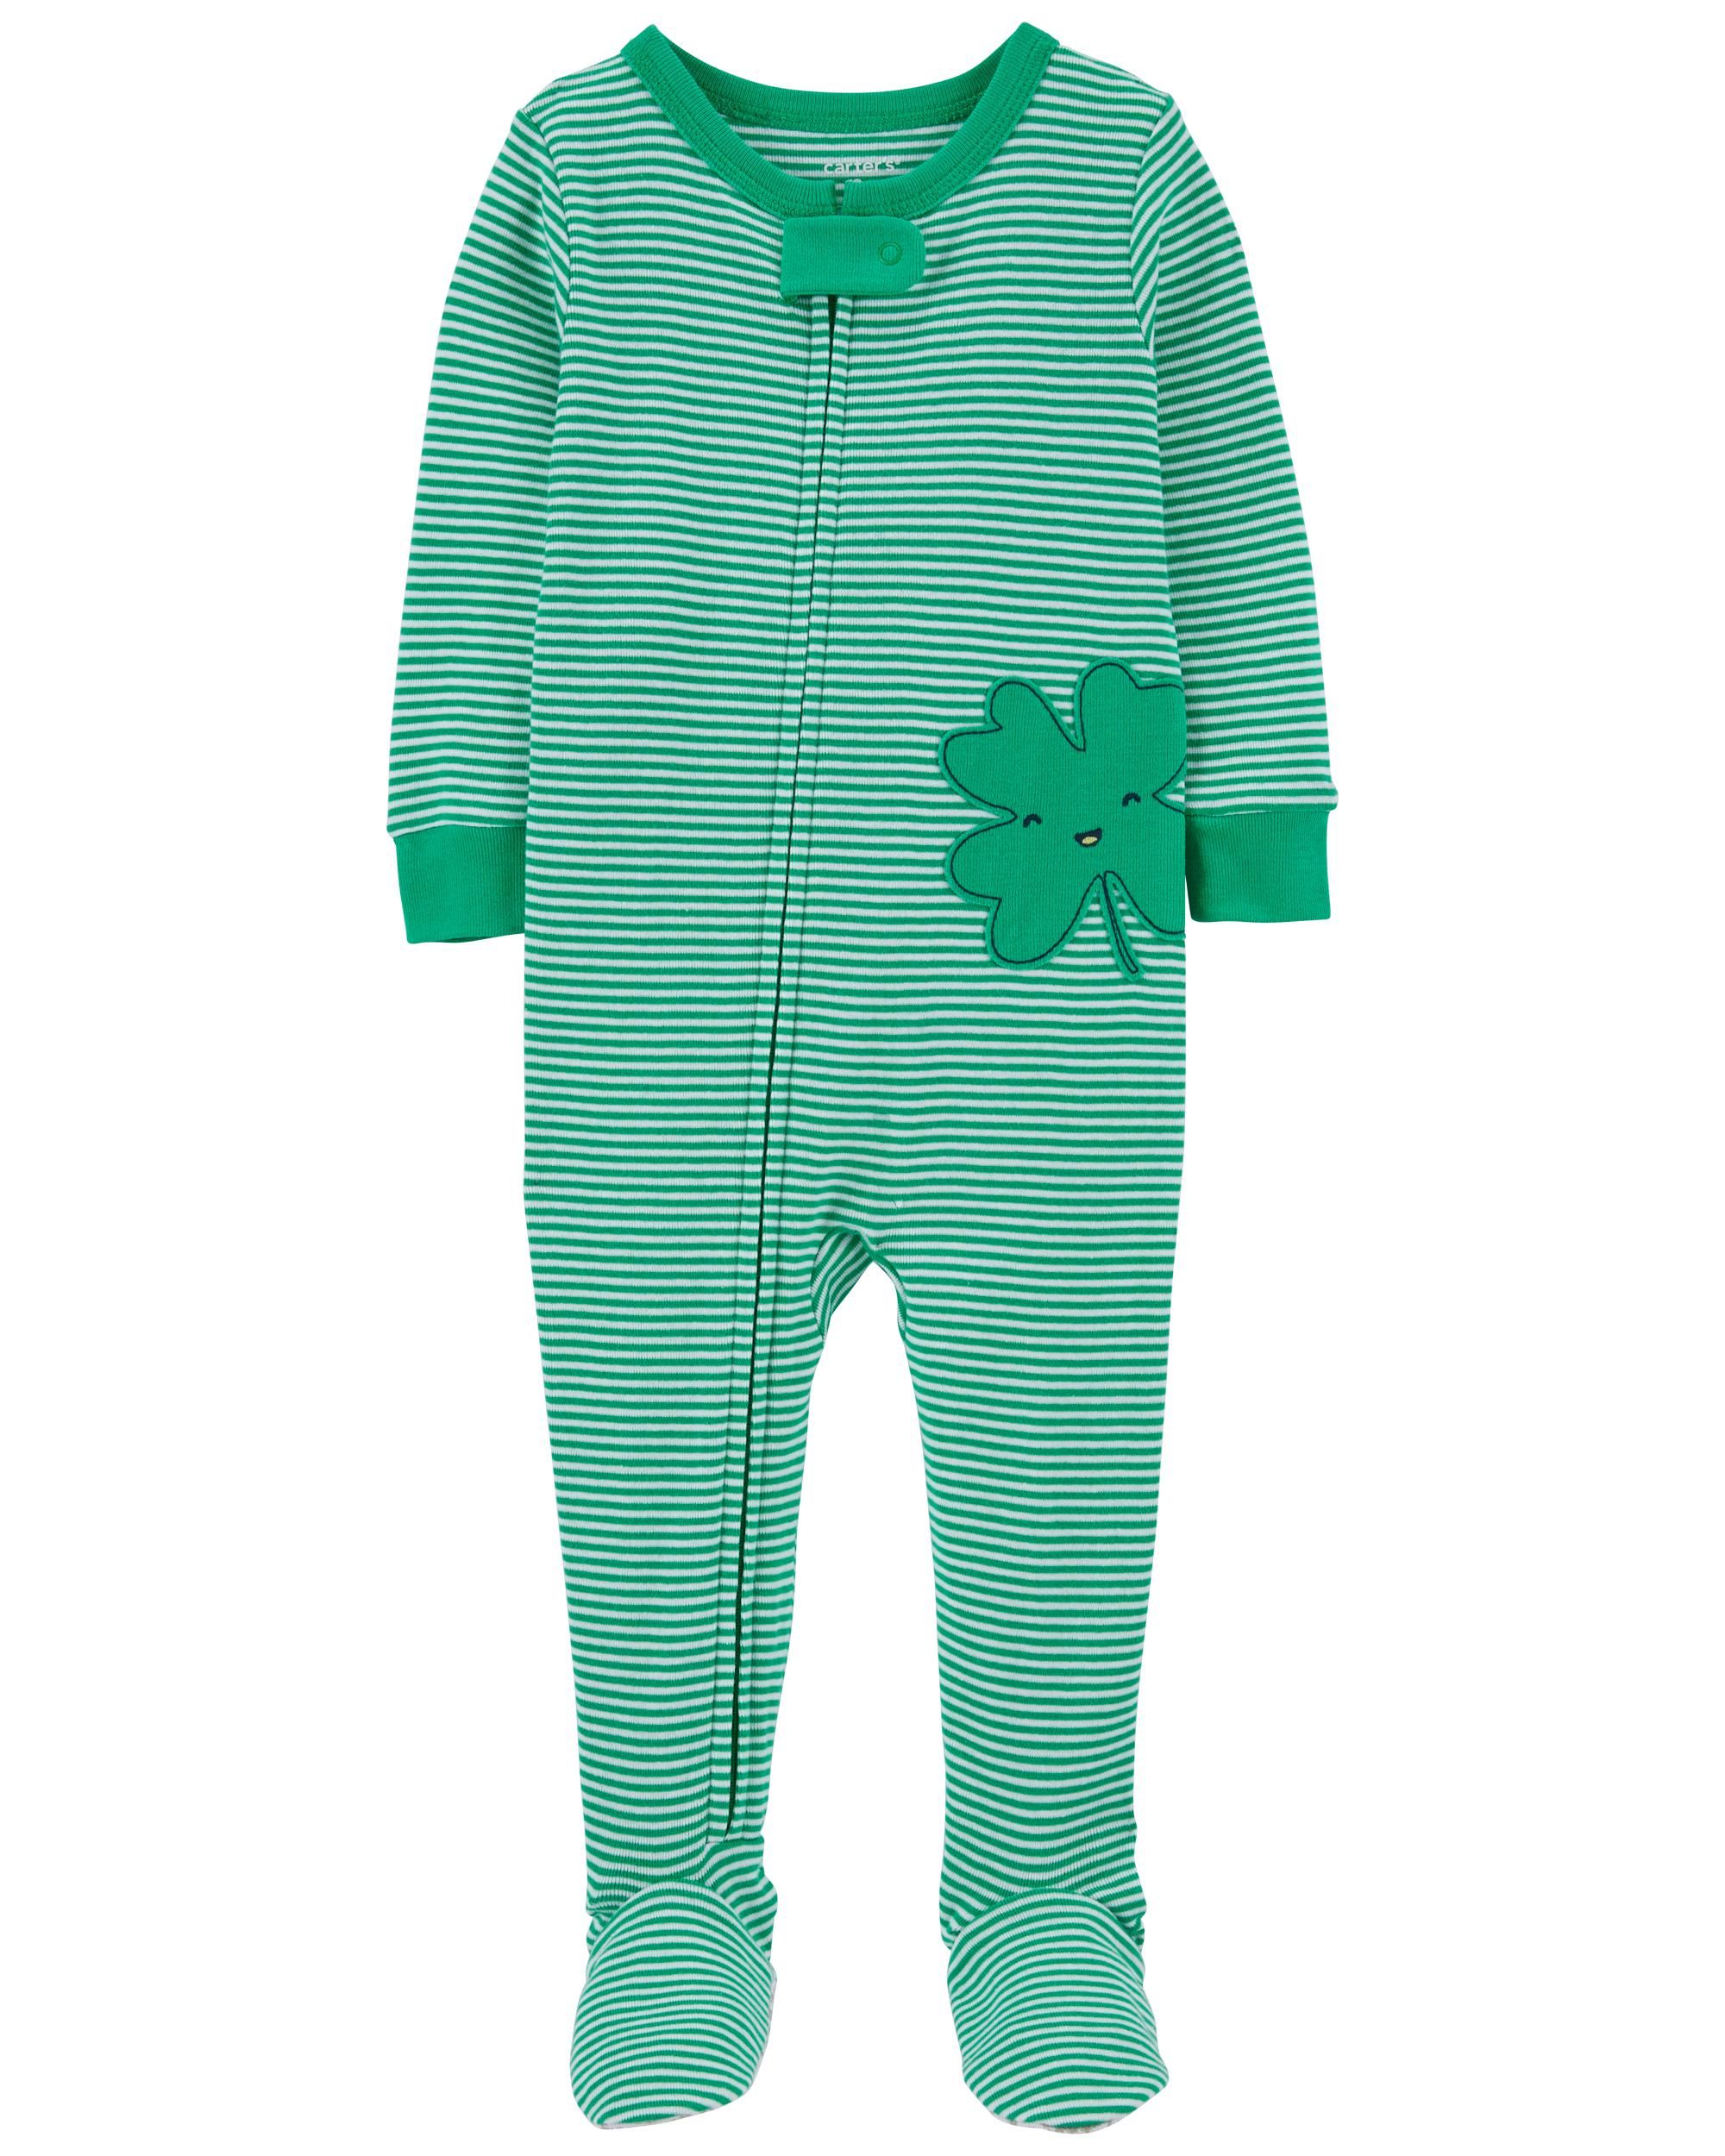 Toddler 1-Piece St. Patrick's Day 100% Snug Fit Cotton Footie PJs | Carter's